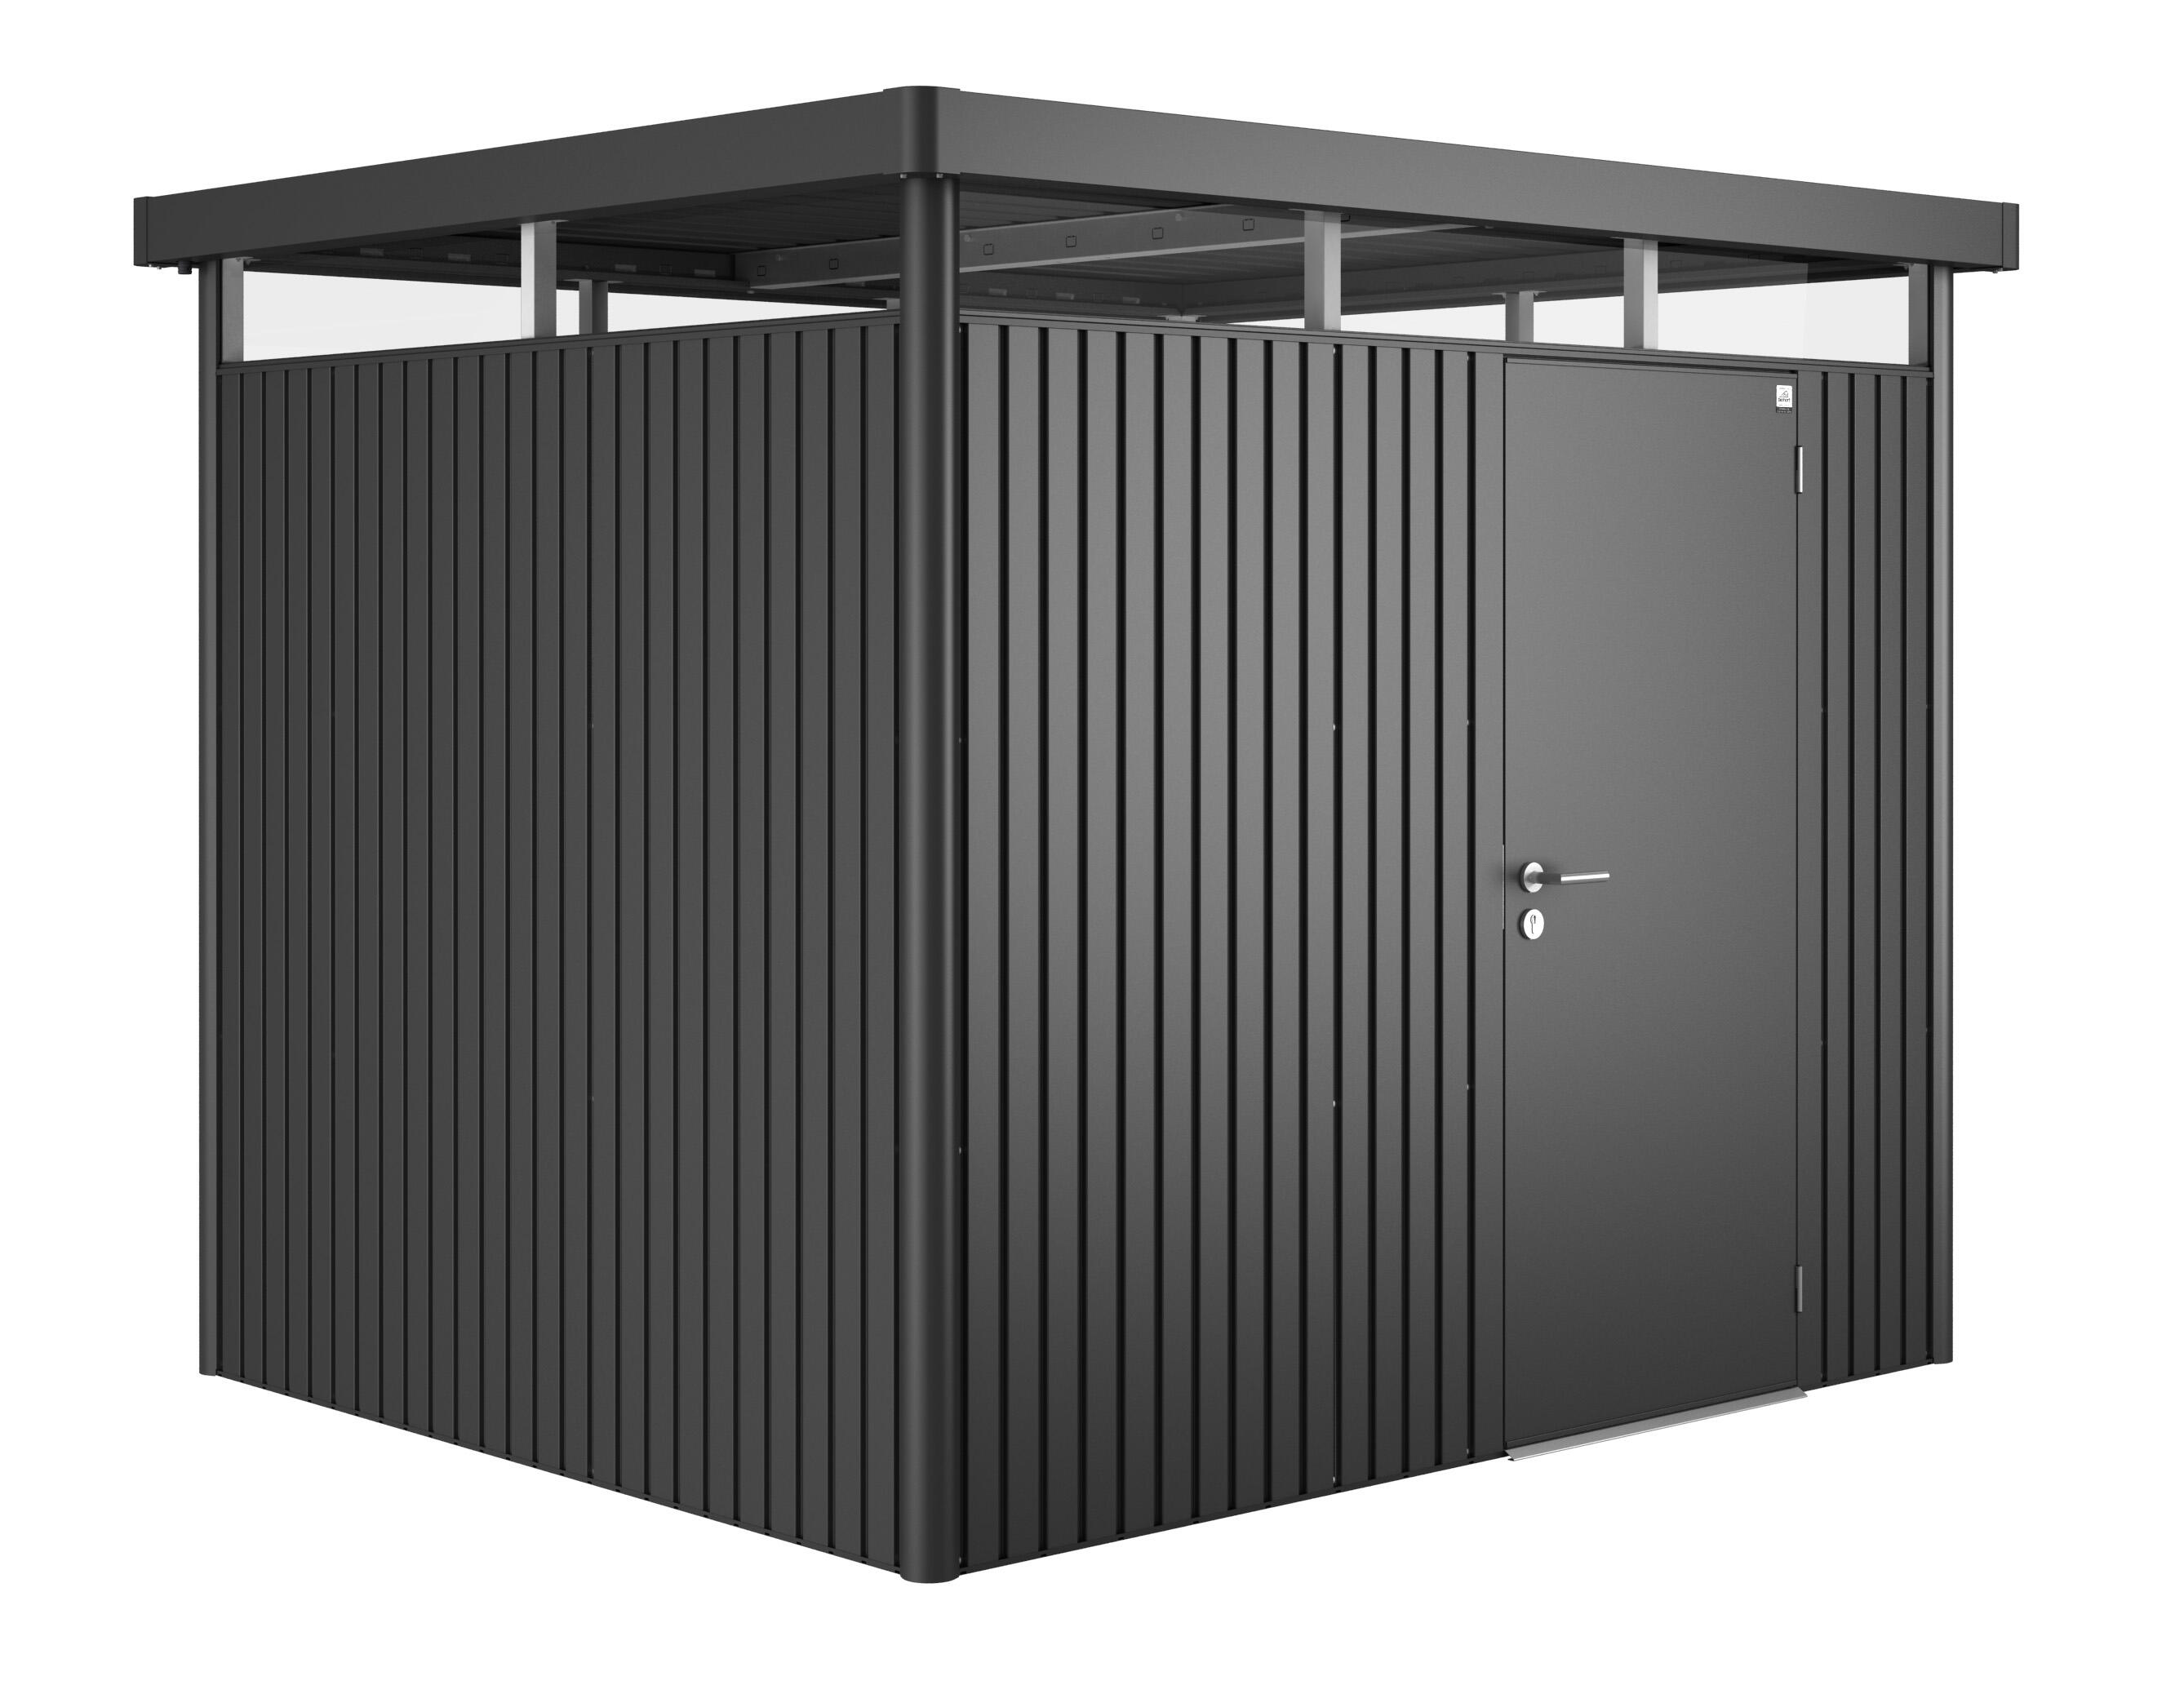 Caseta de metal h3 standard de 275x222x235 cm y 6.46 m2